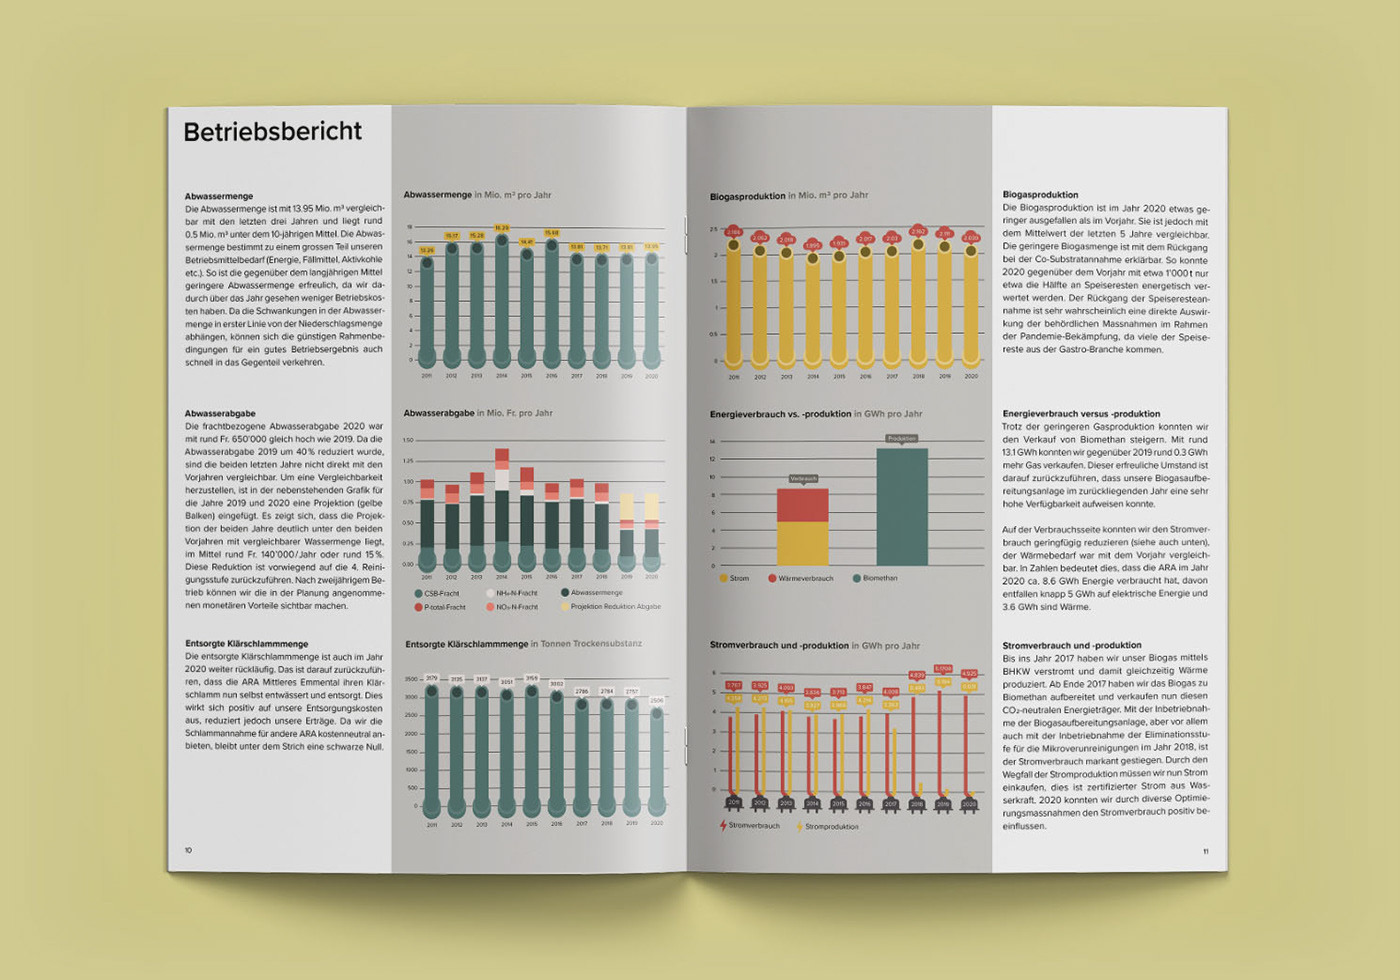 Adobe Portfolio annual report Nature panorama pollution series water editorial design  Editorial Illustration